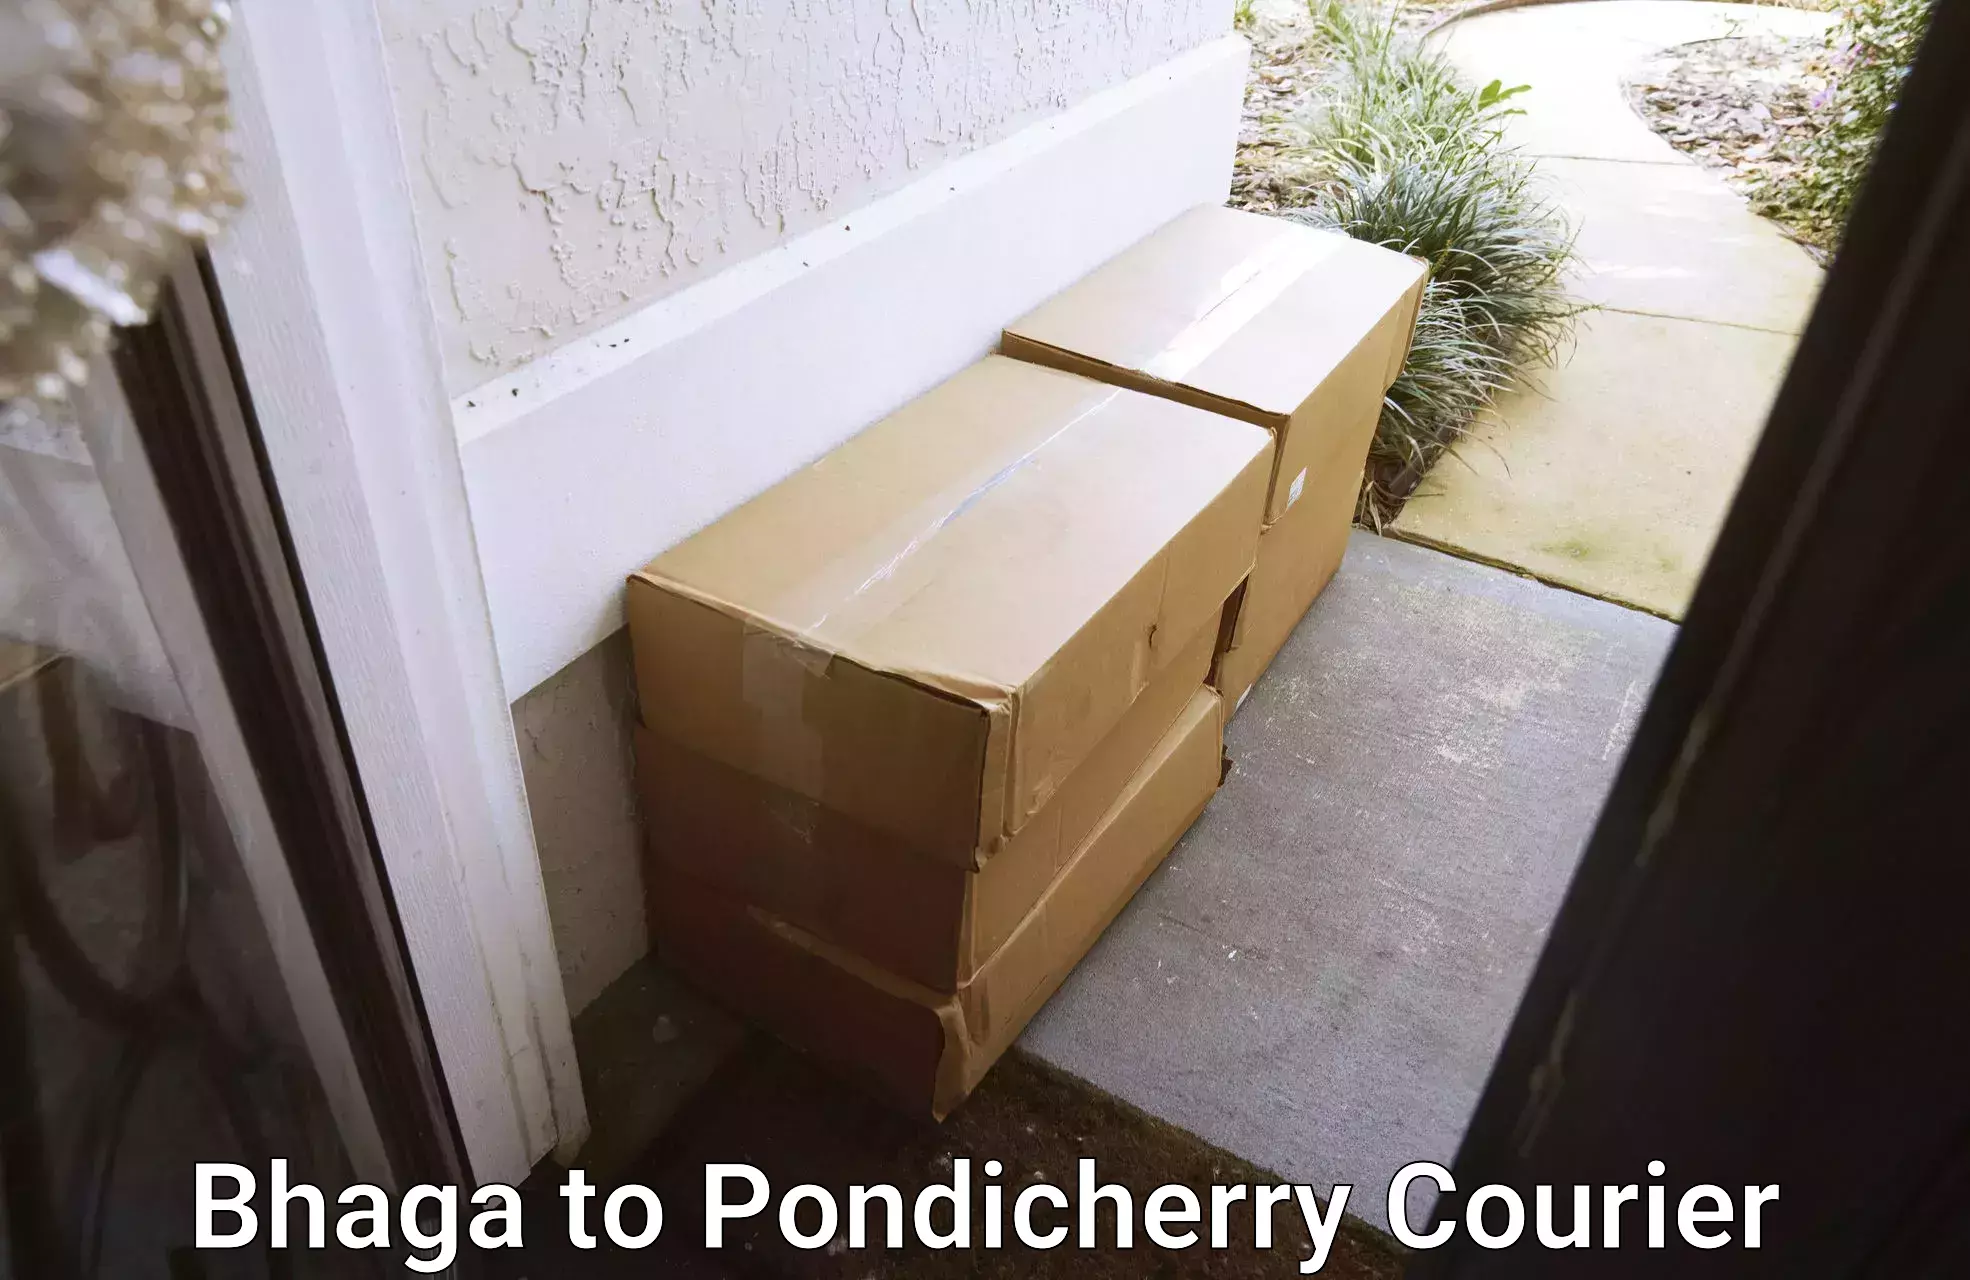 User-friendly delivery service Bhaga to Pondicherry